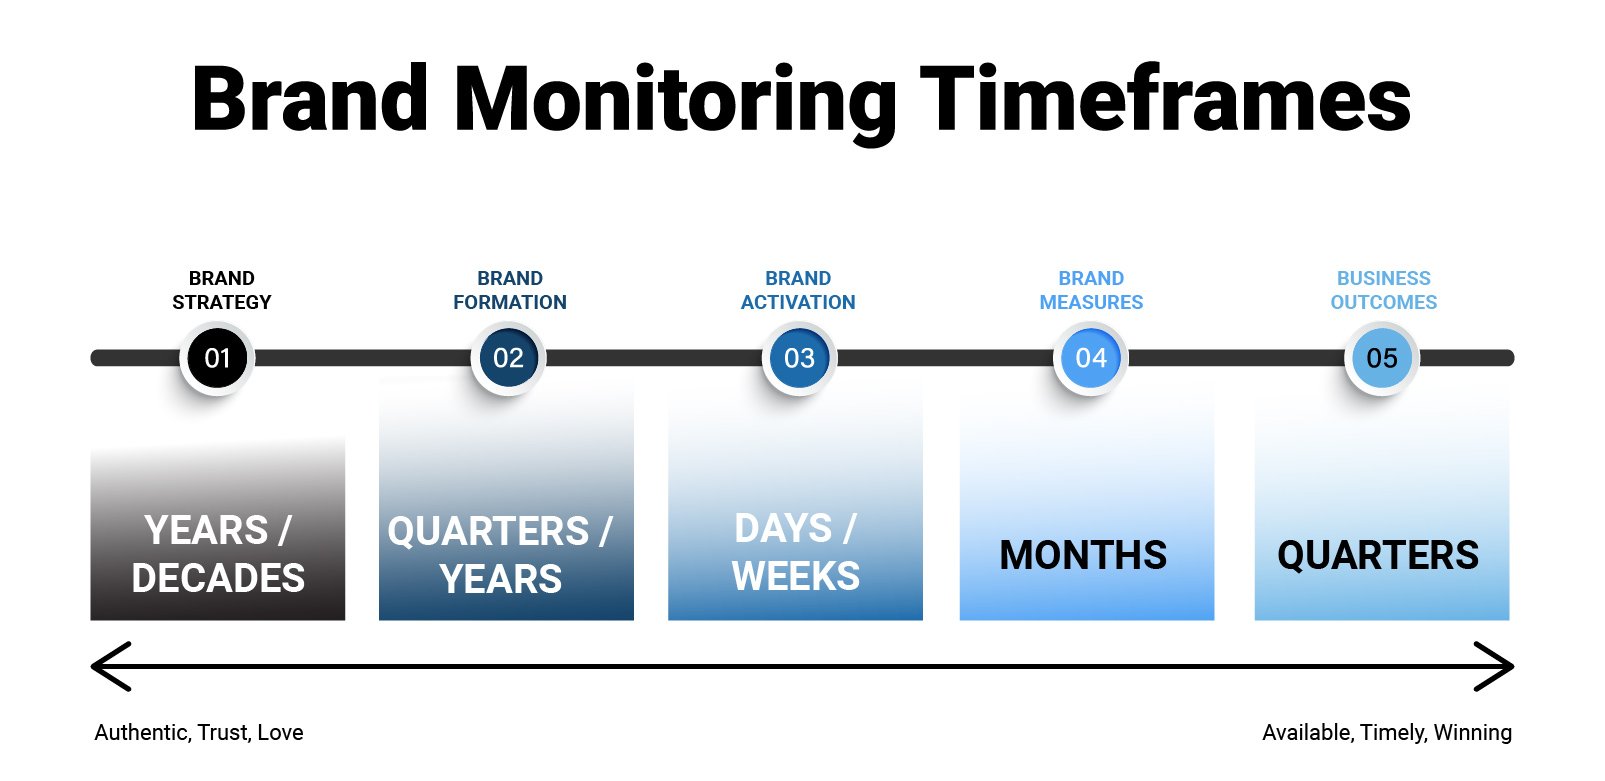 Brand Monitoring Timeframes